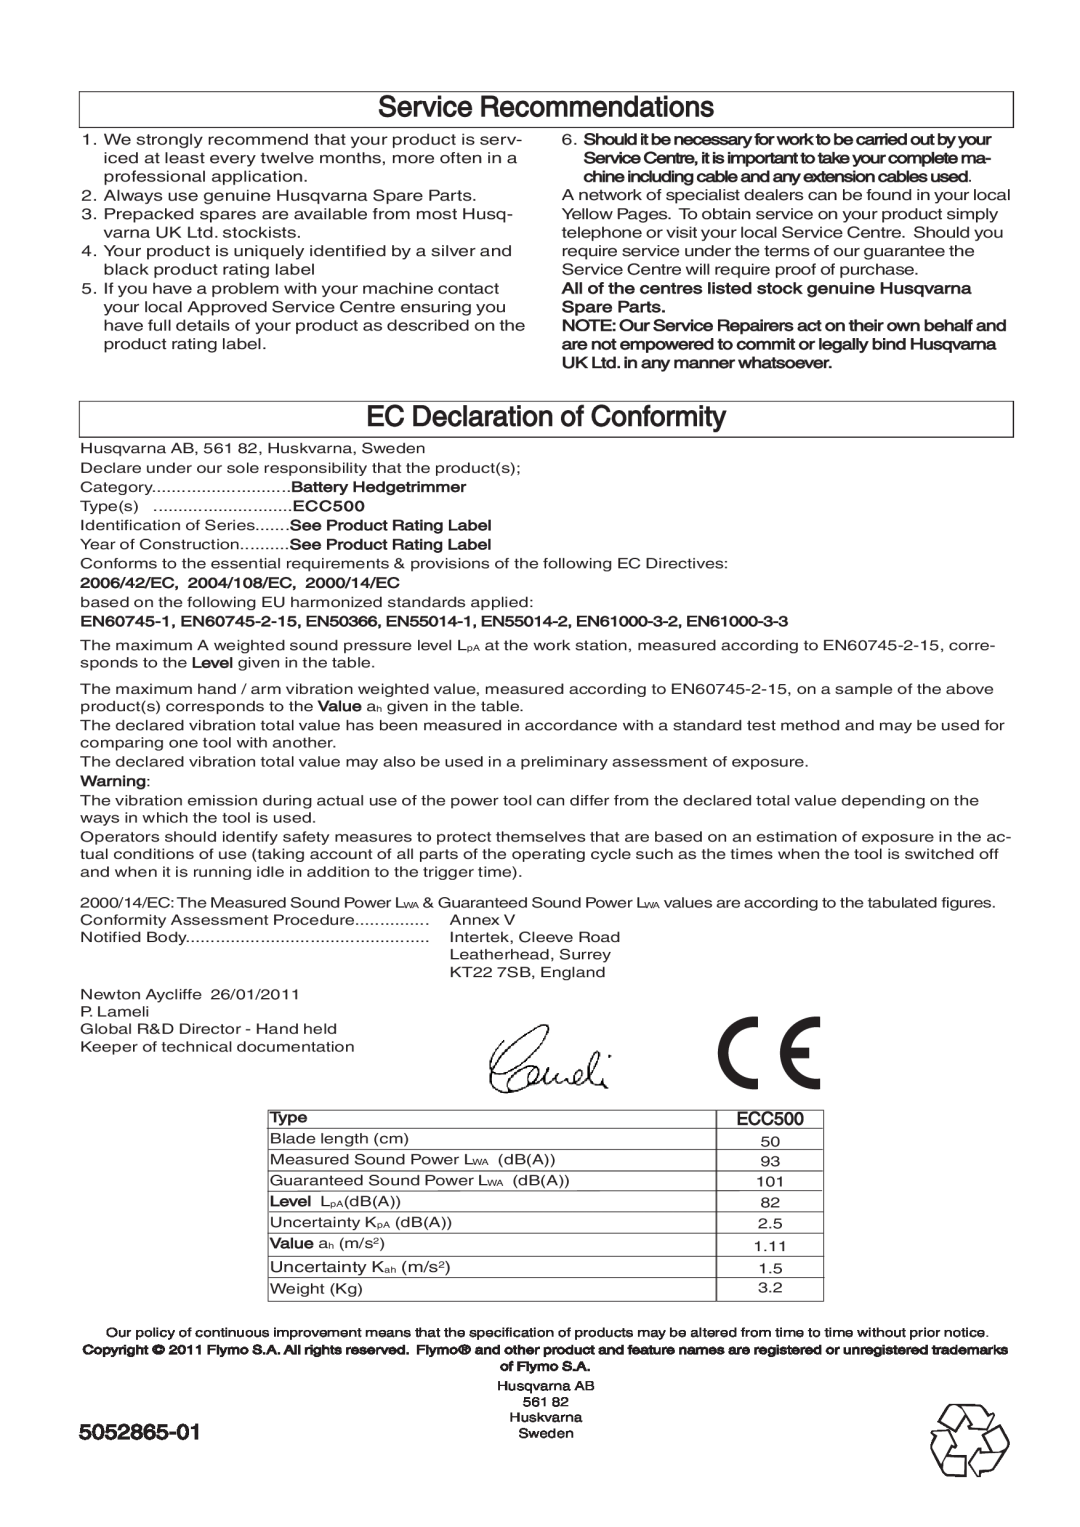 Flymo 500CT manual Service Recommendations, EC Declaration of Conformity, 5052865-01, ECC500 